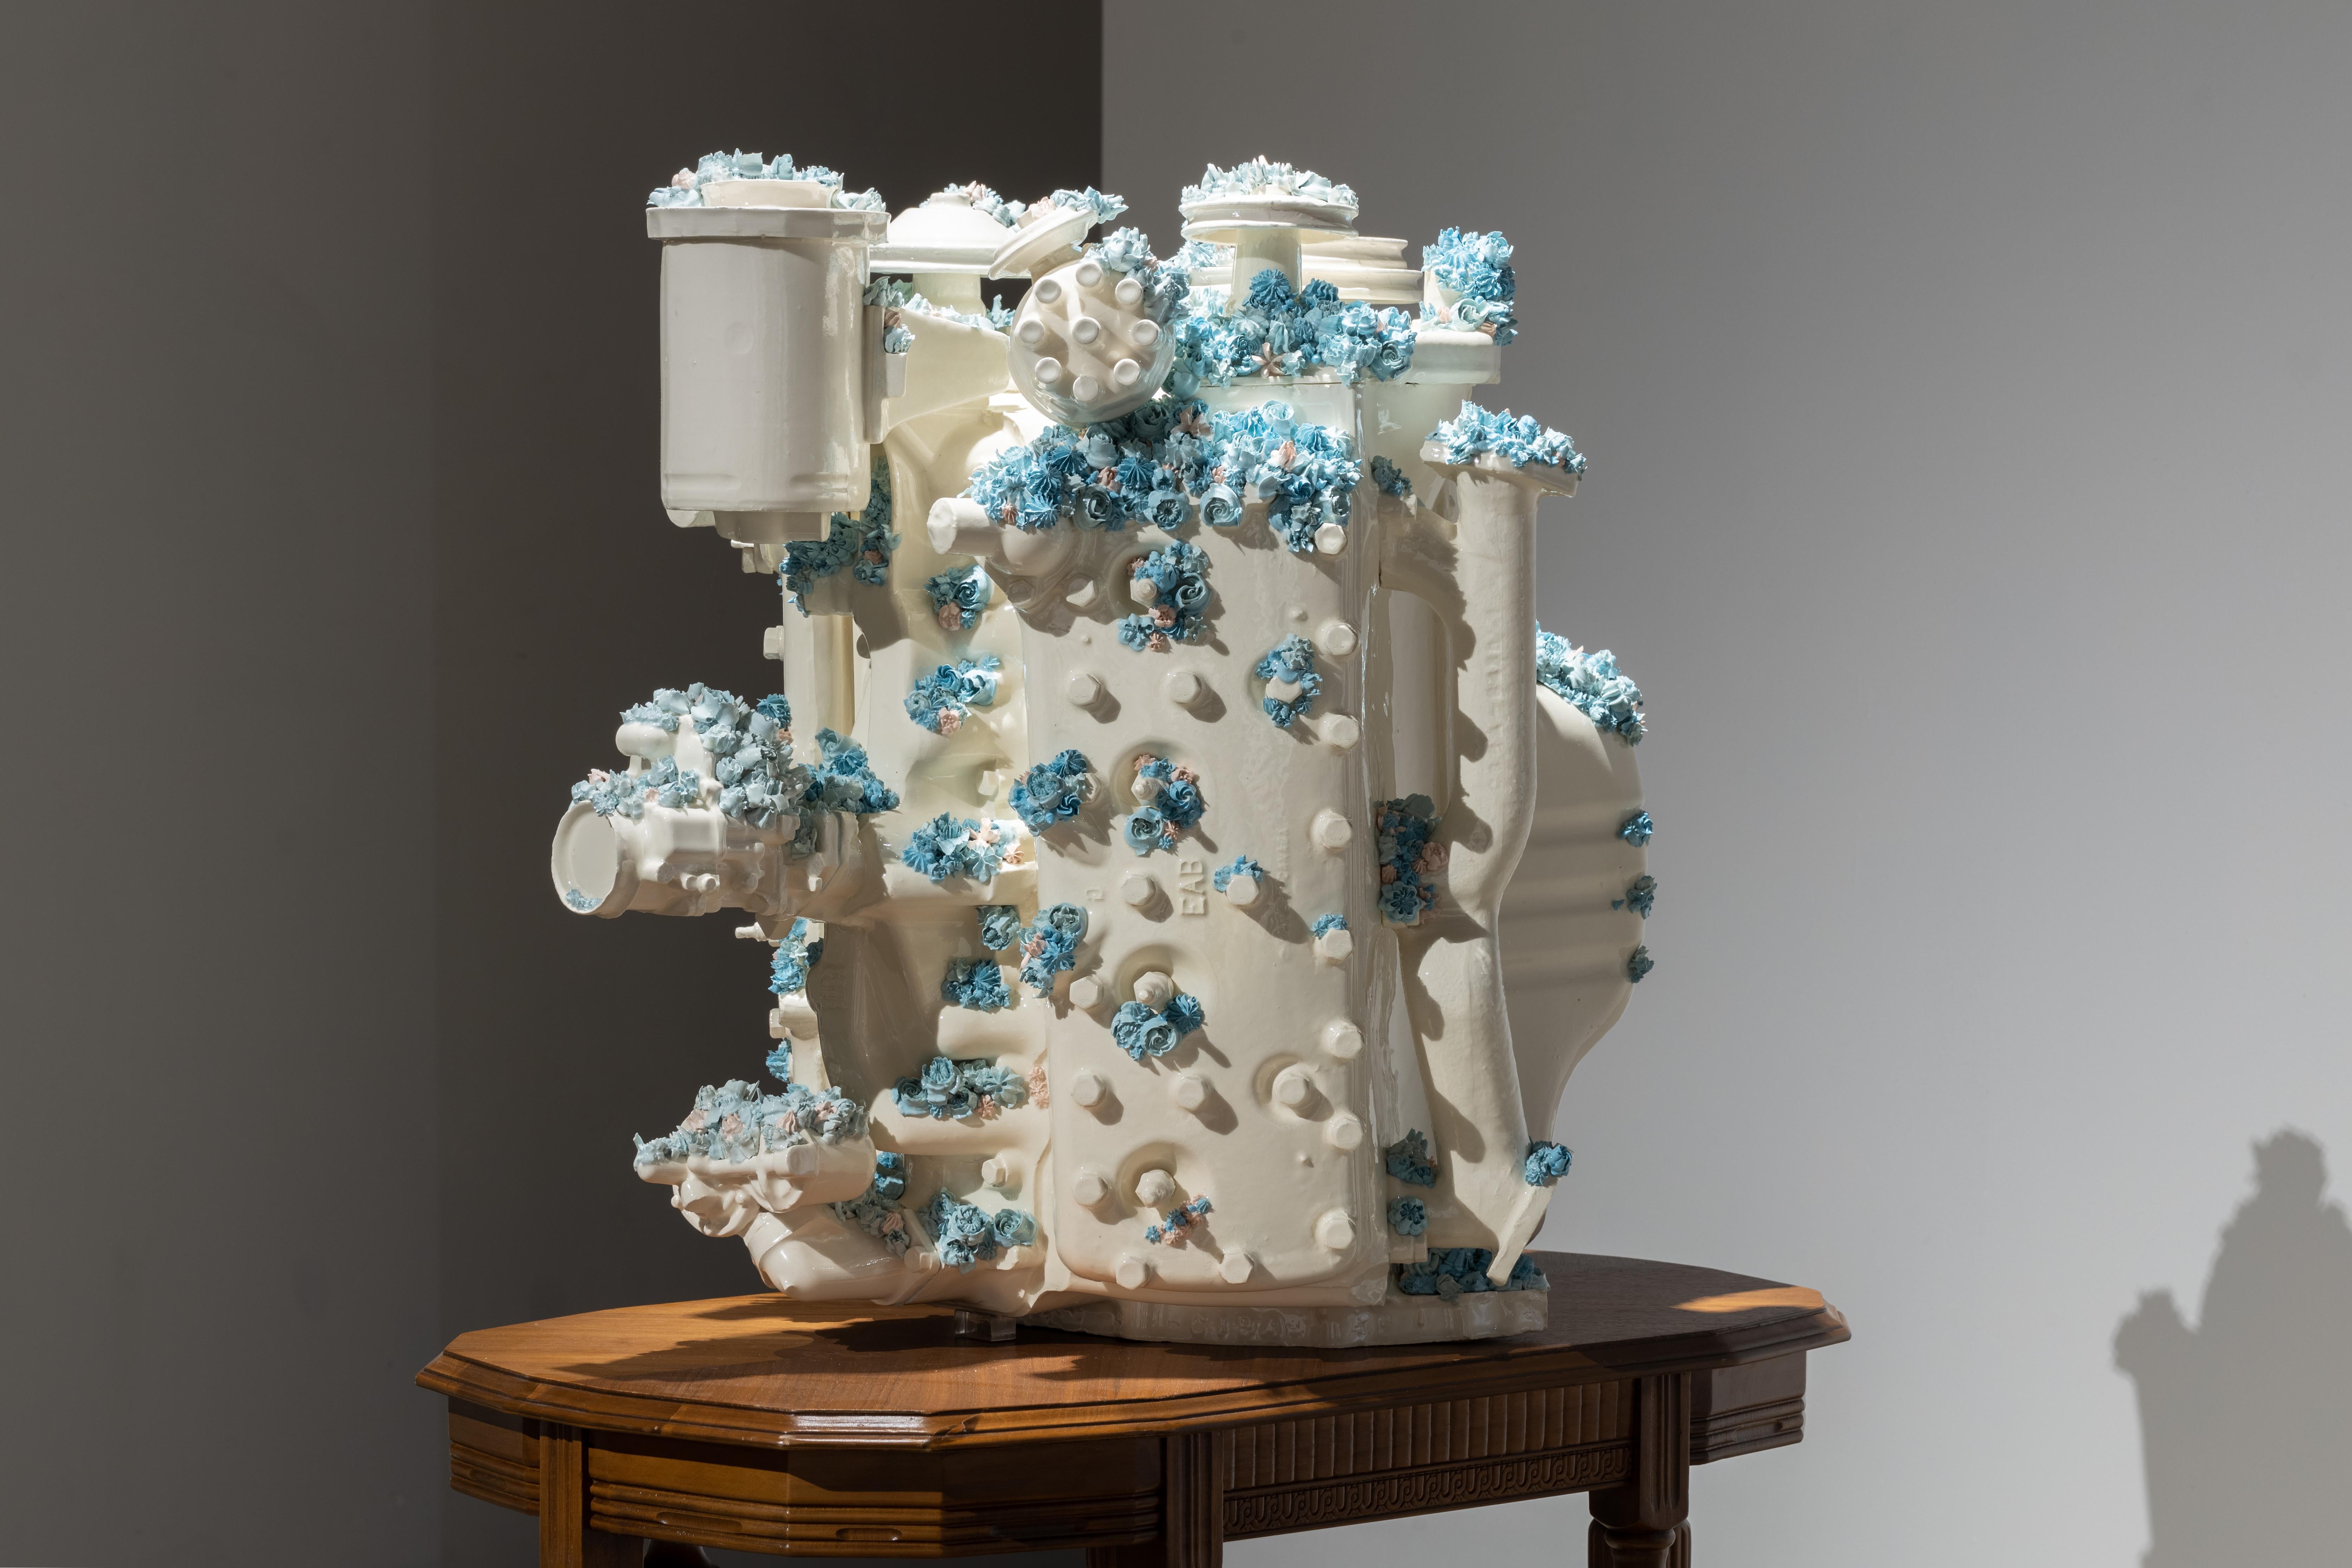 Clint Neufeld Figurative Sculpture - Engine with blue flowers